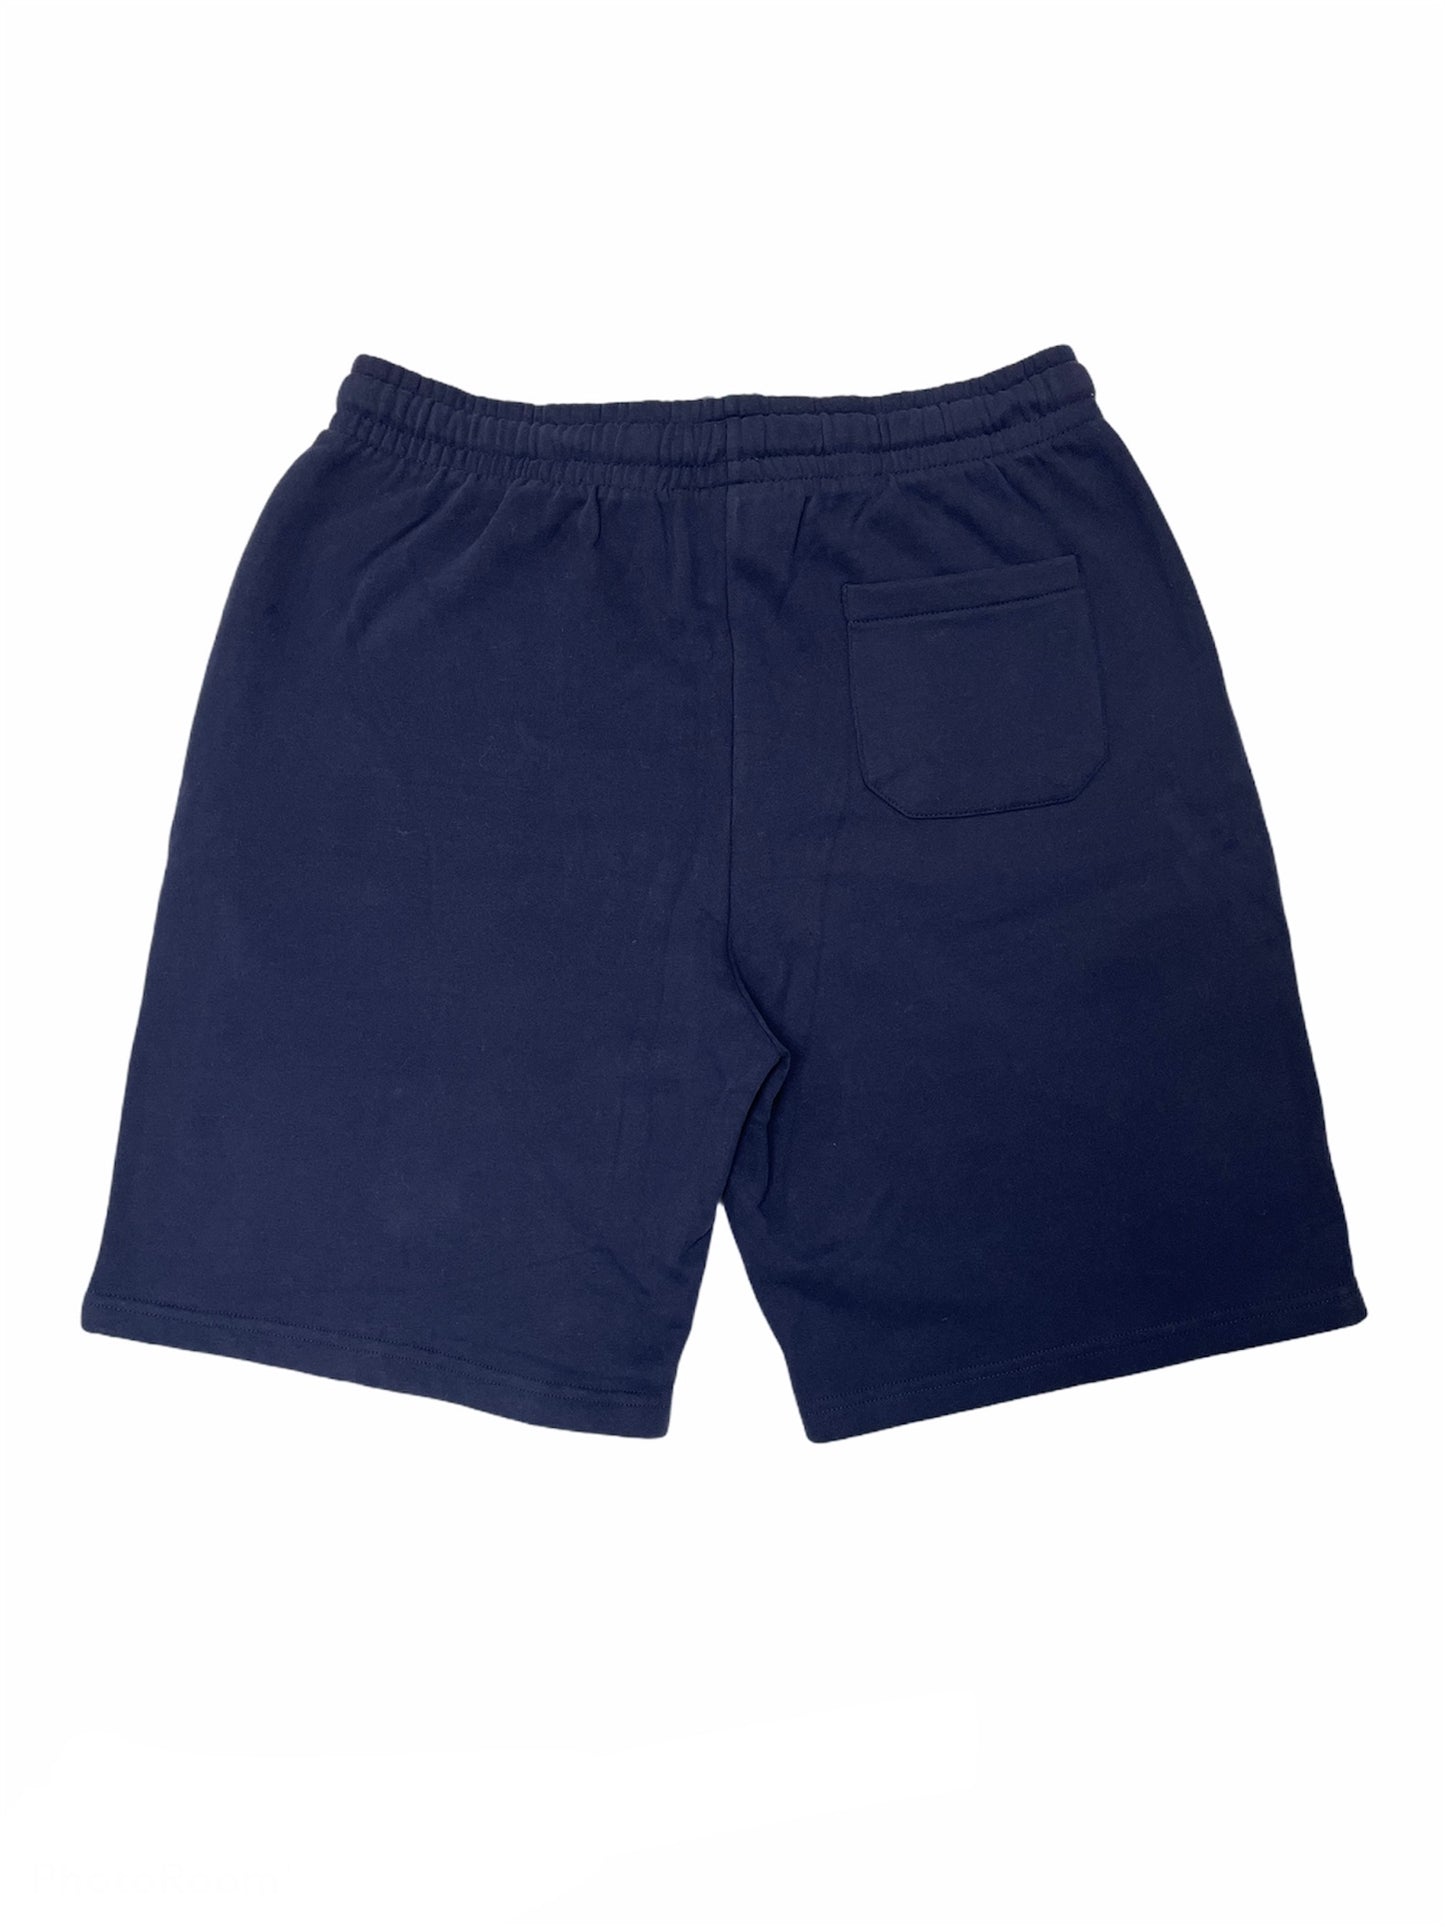 Vintage Tommer Essential Men's Sweat Shorts in Navy XL